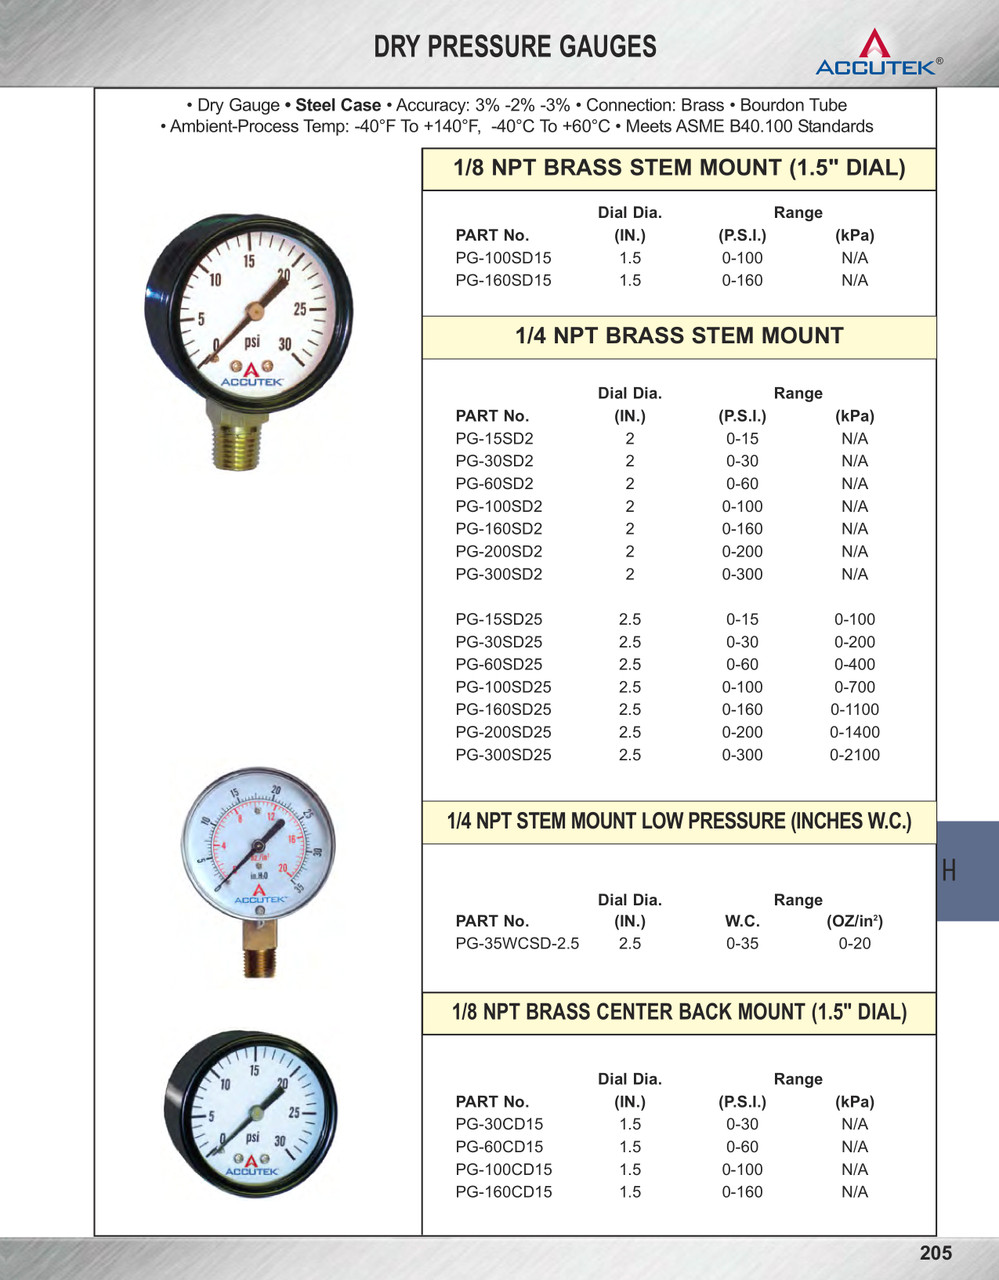 30-0-30 VAC/PSI  - 2" Dry - Stainless Case - Brass Stem Mount - Vacuum/Pressure Gauge  PG-30V30SD2